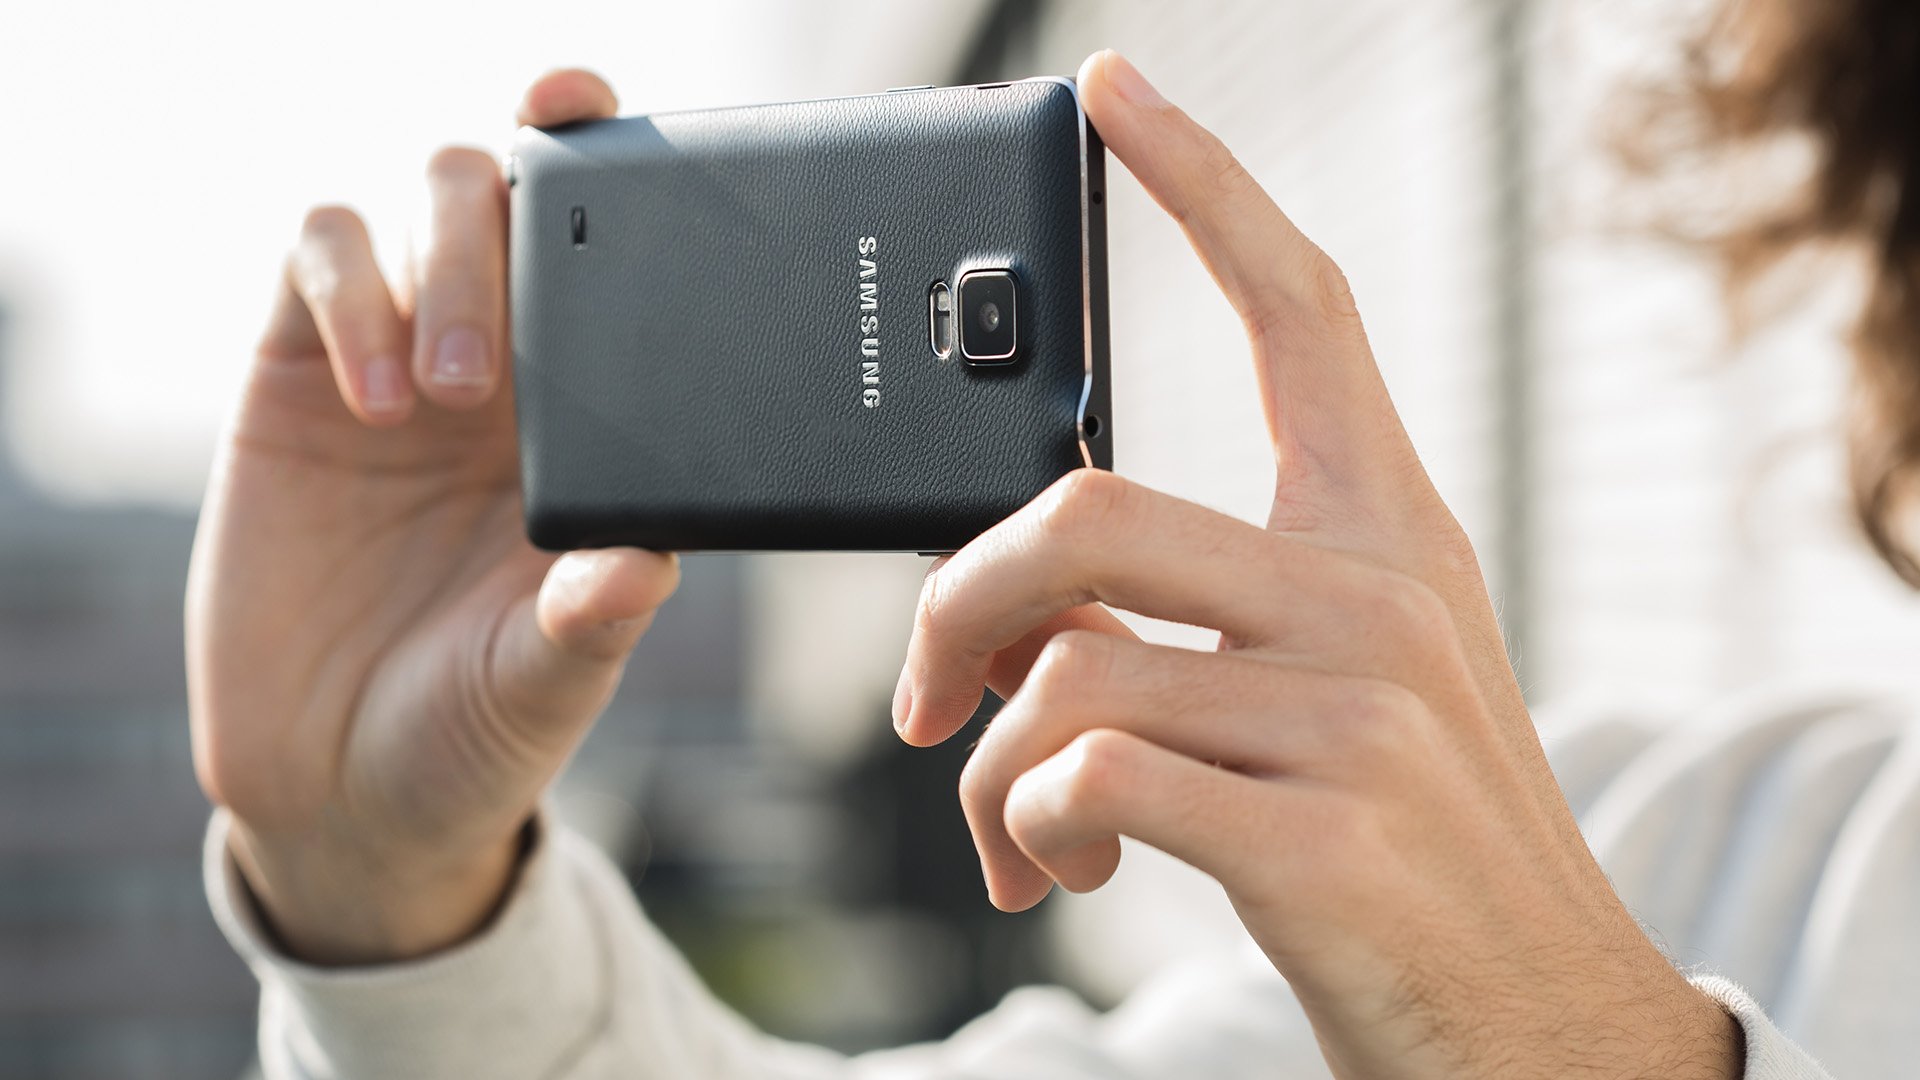 Samsung Note 4 Камера